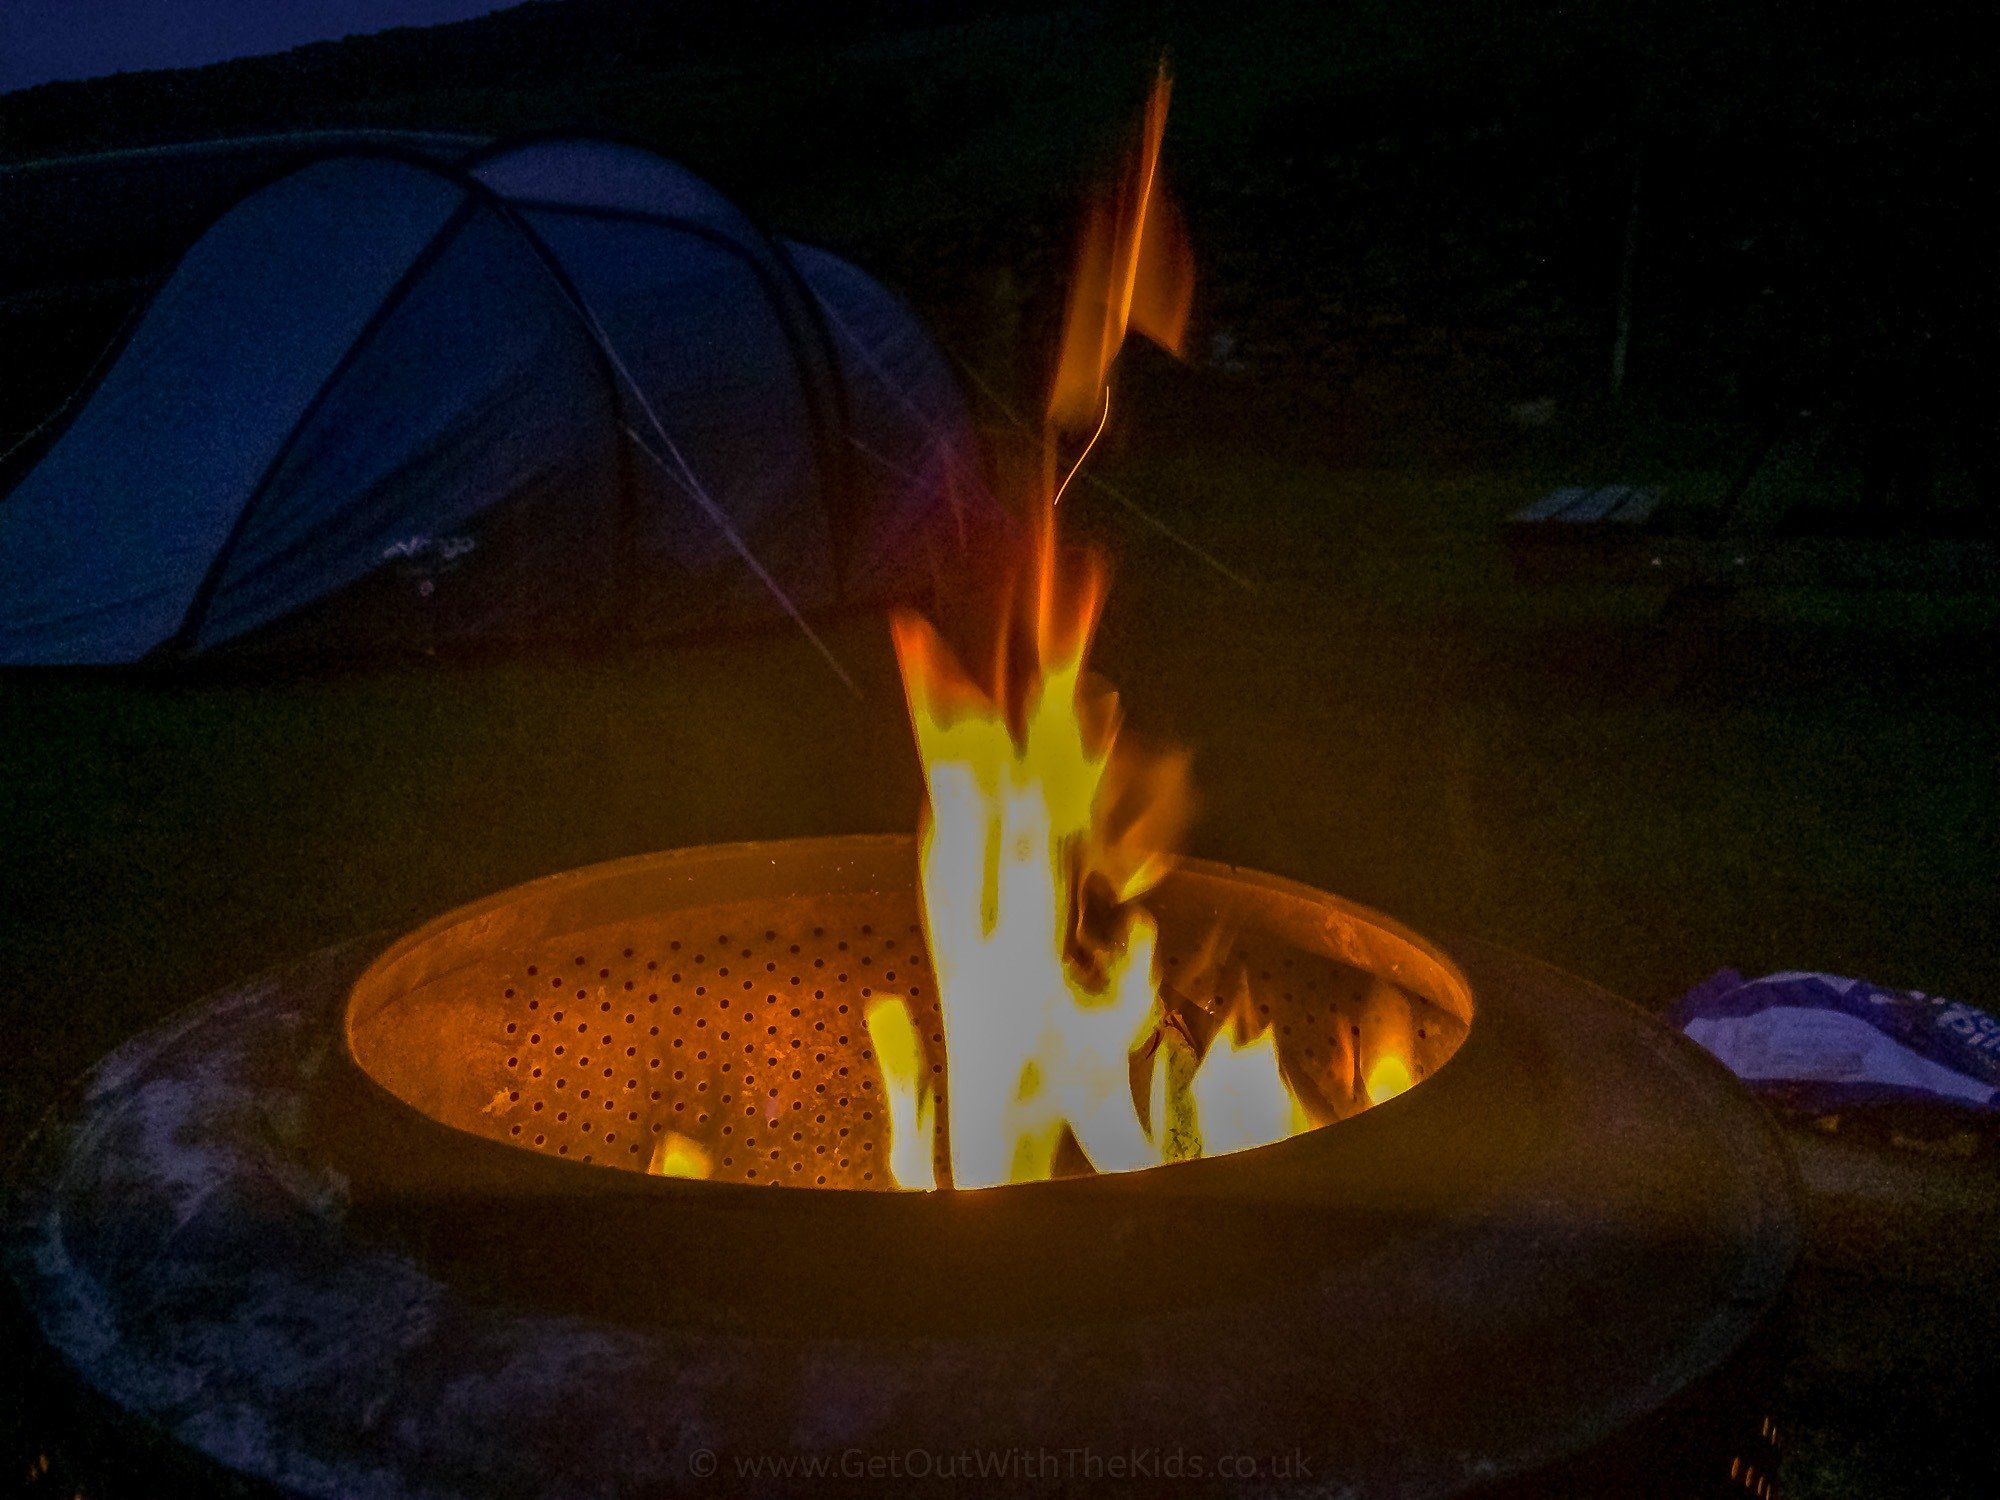 Having a campfire at the Usha Gap Campsite